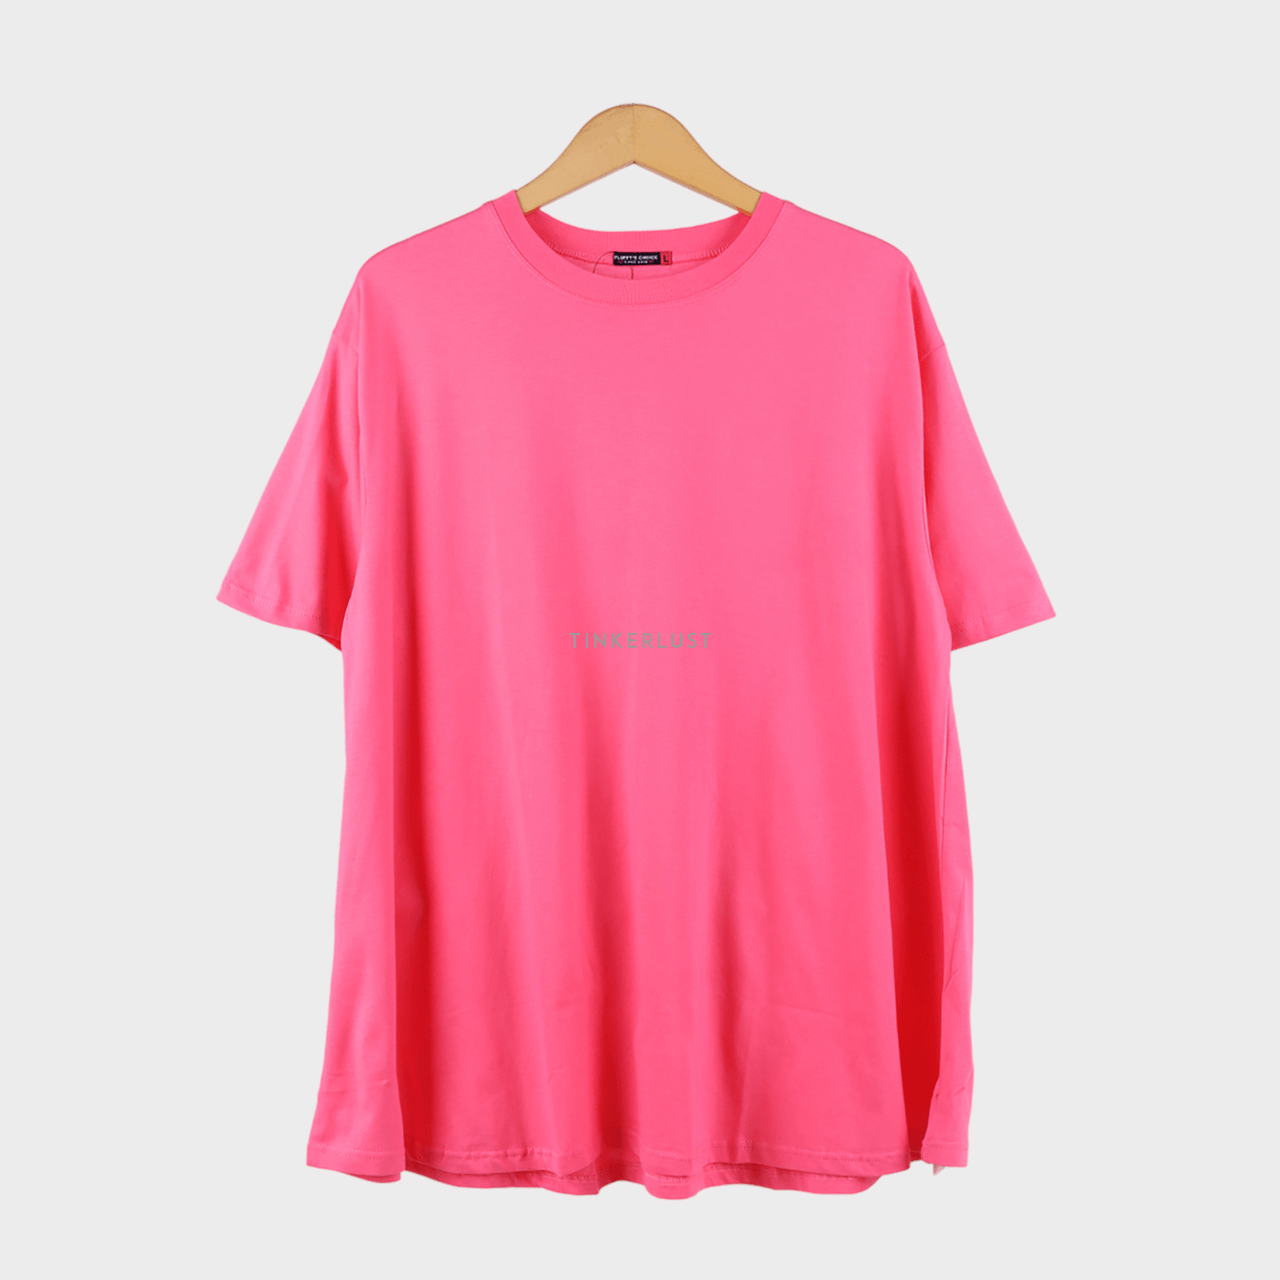 Pluffy's Choice Pink T-shirt